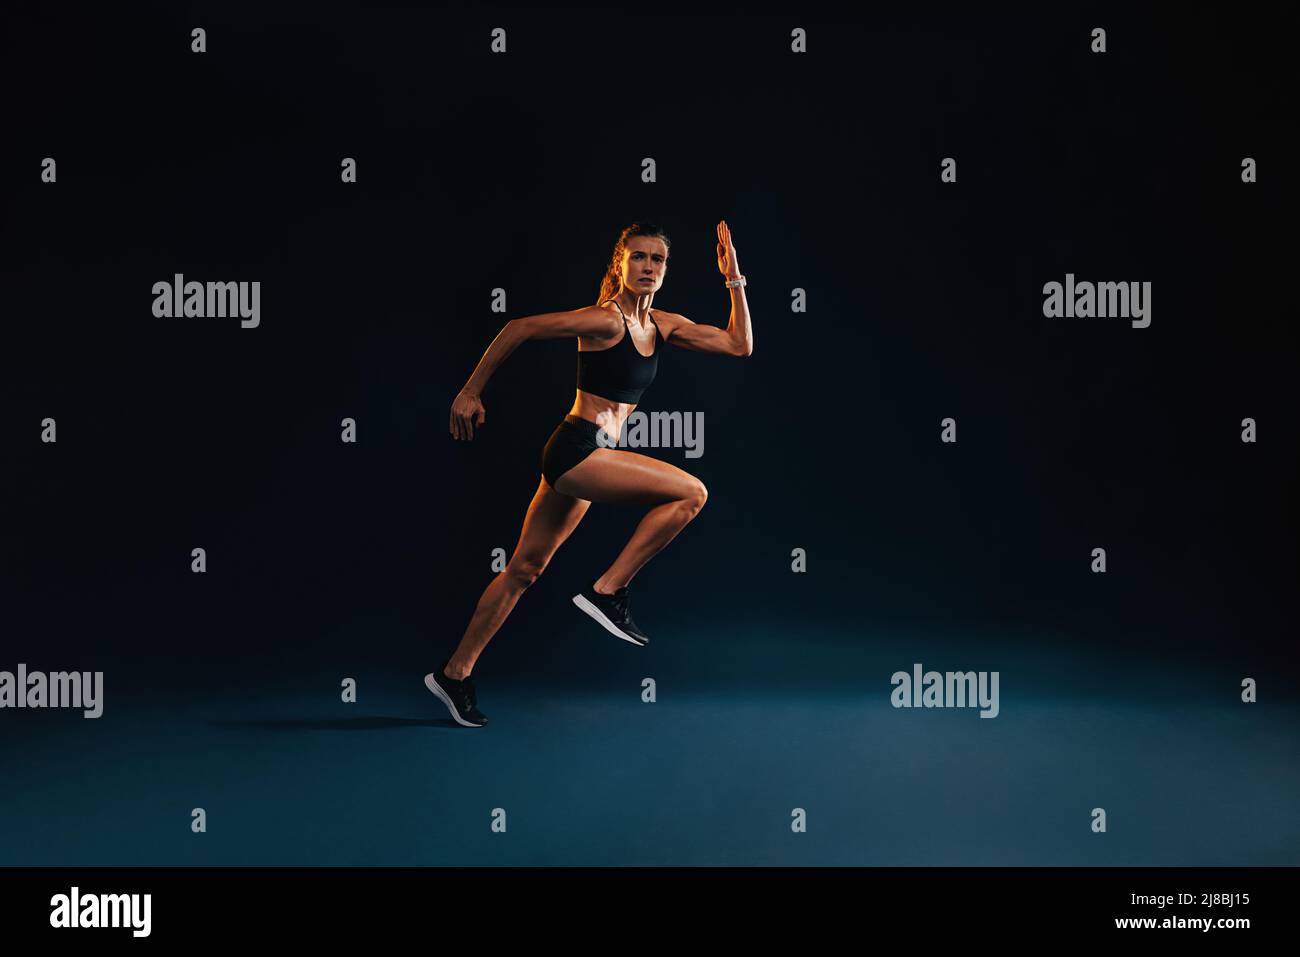 Athlete in starting position for running against black background stock  photo